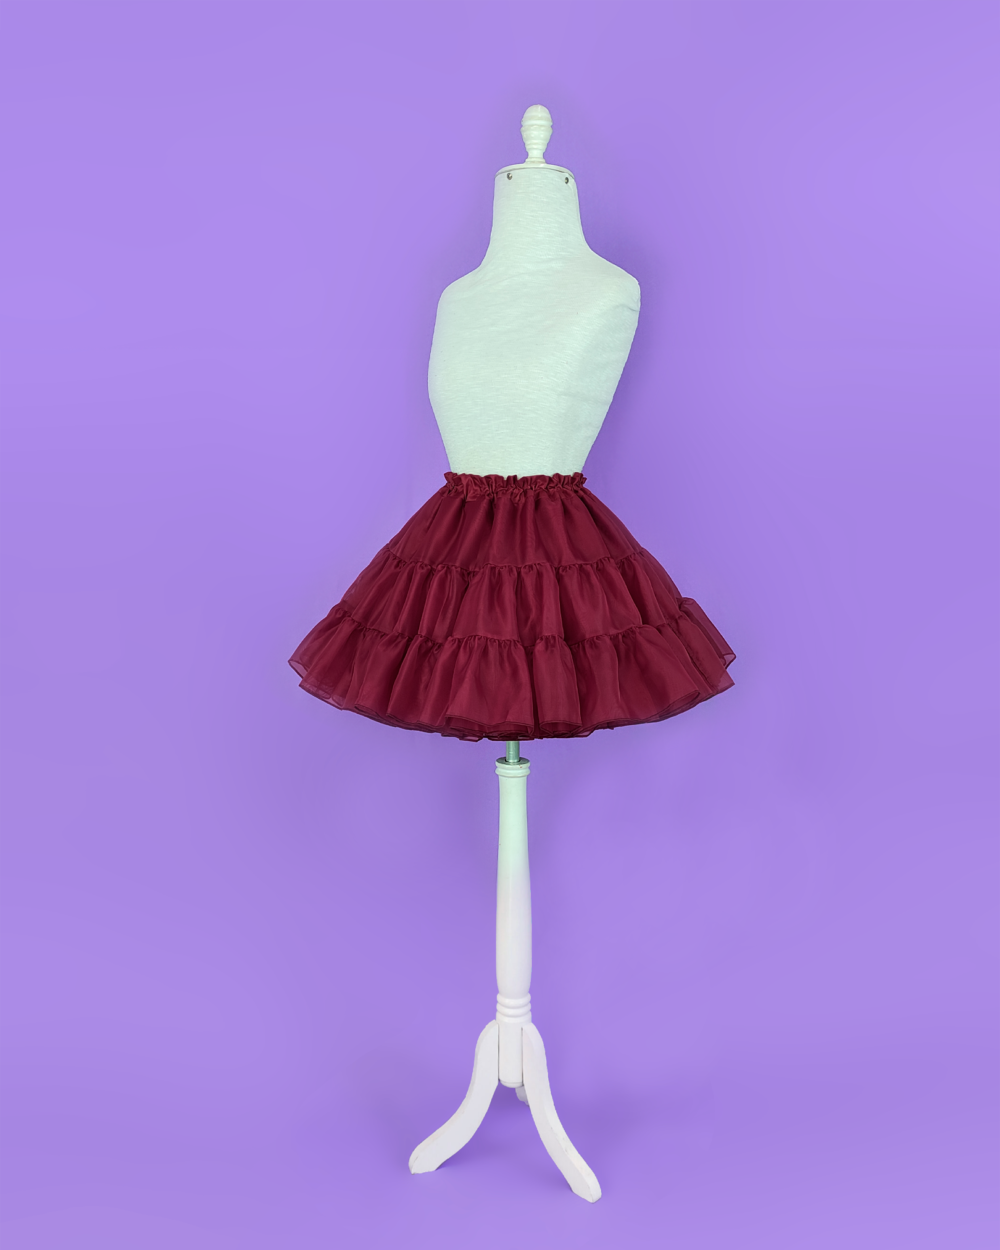 A-line petticoat by melikestea